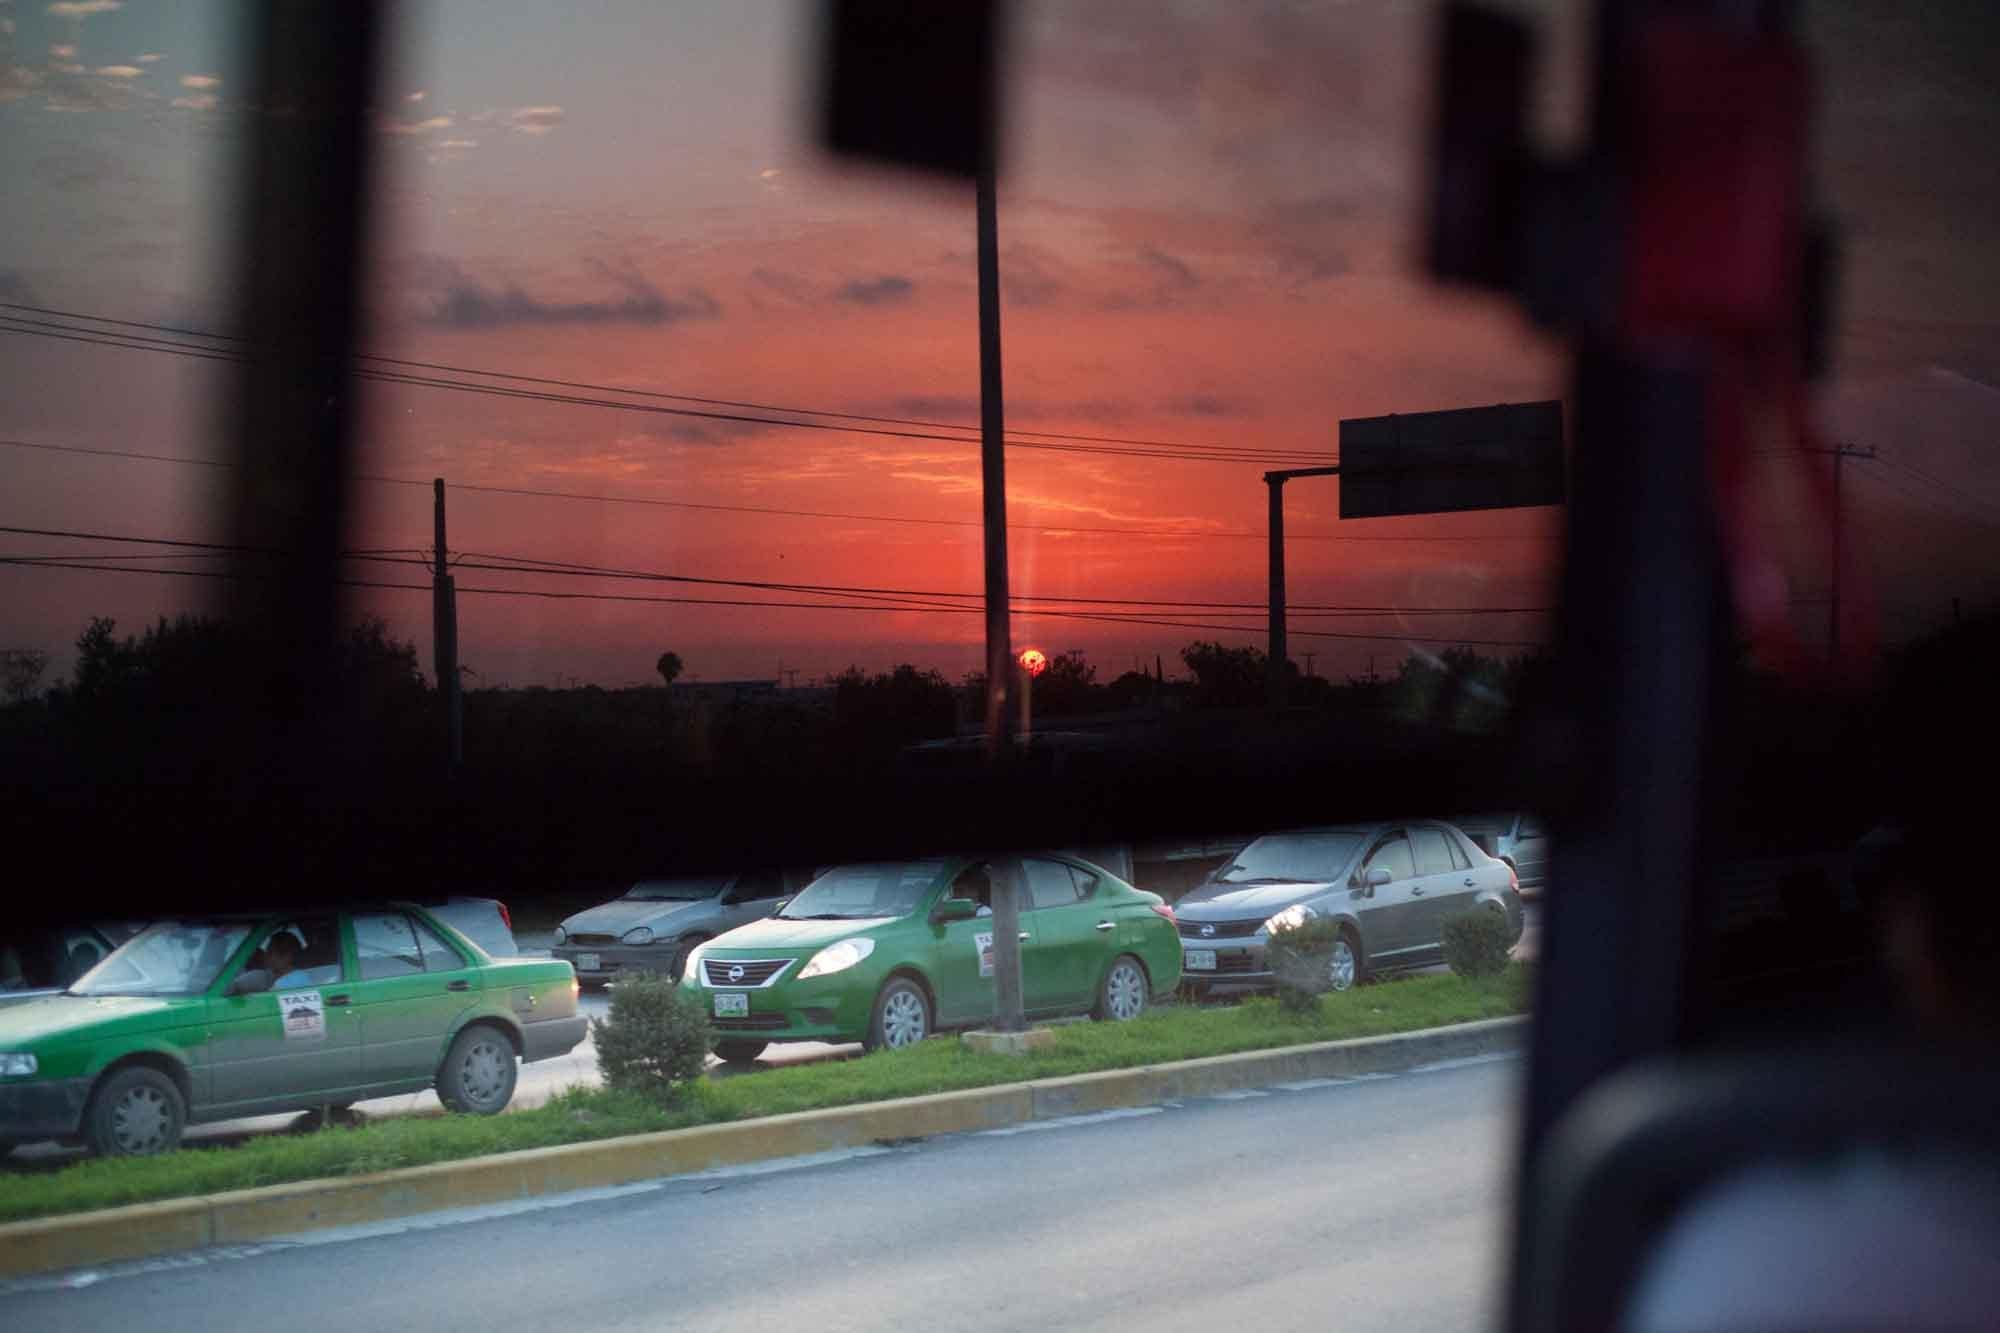 Alejandro Cartagena Color Photograph - Untitled #12 (Suburban Bus)